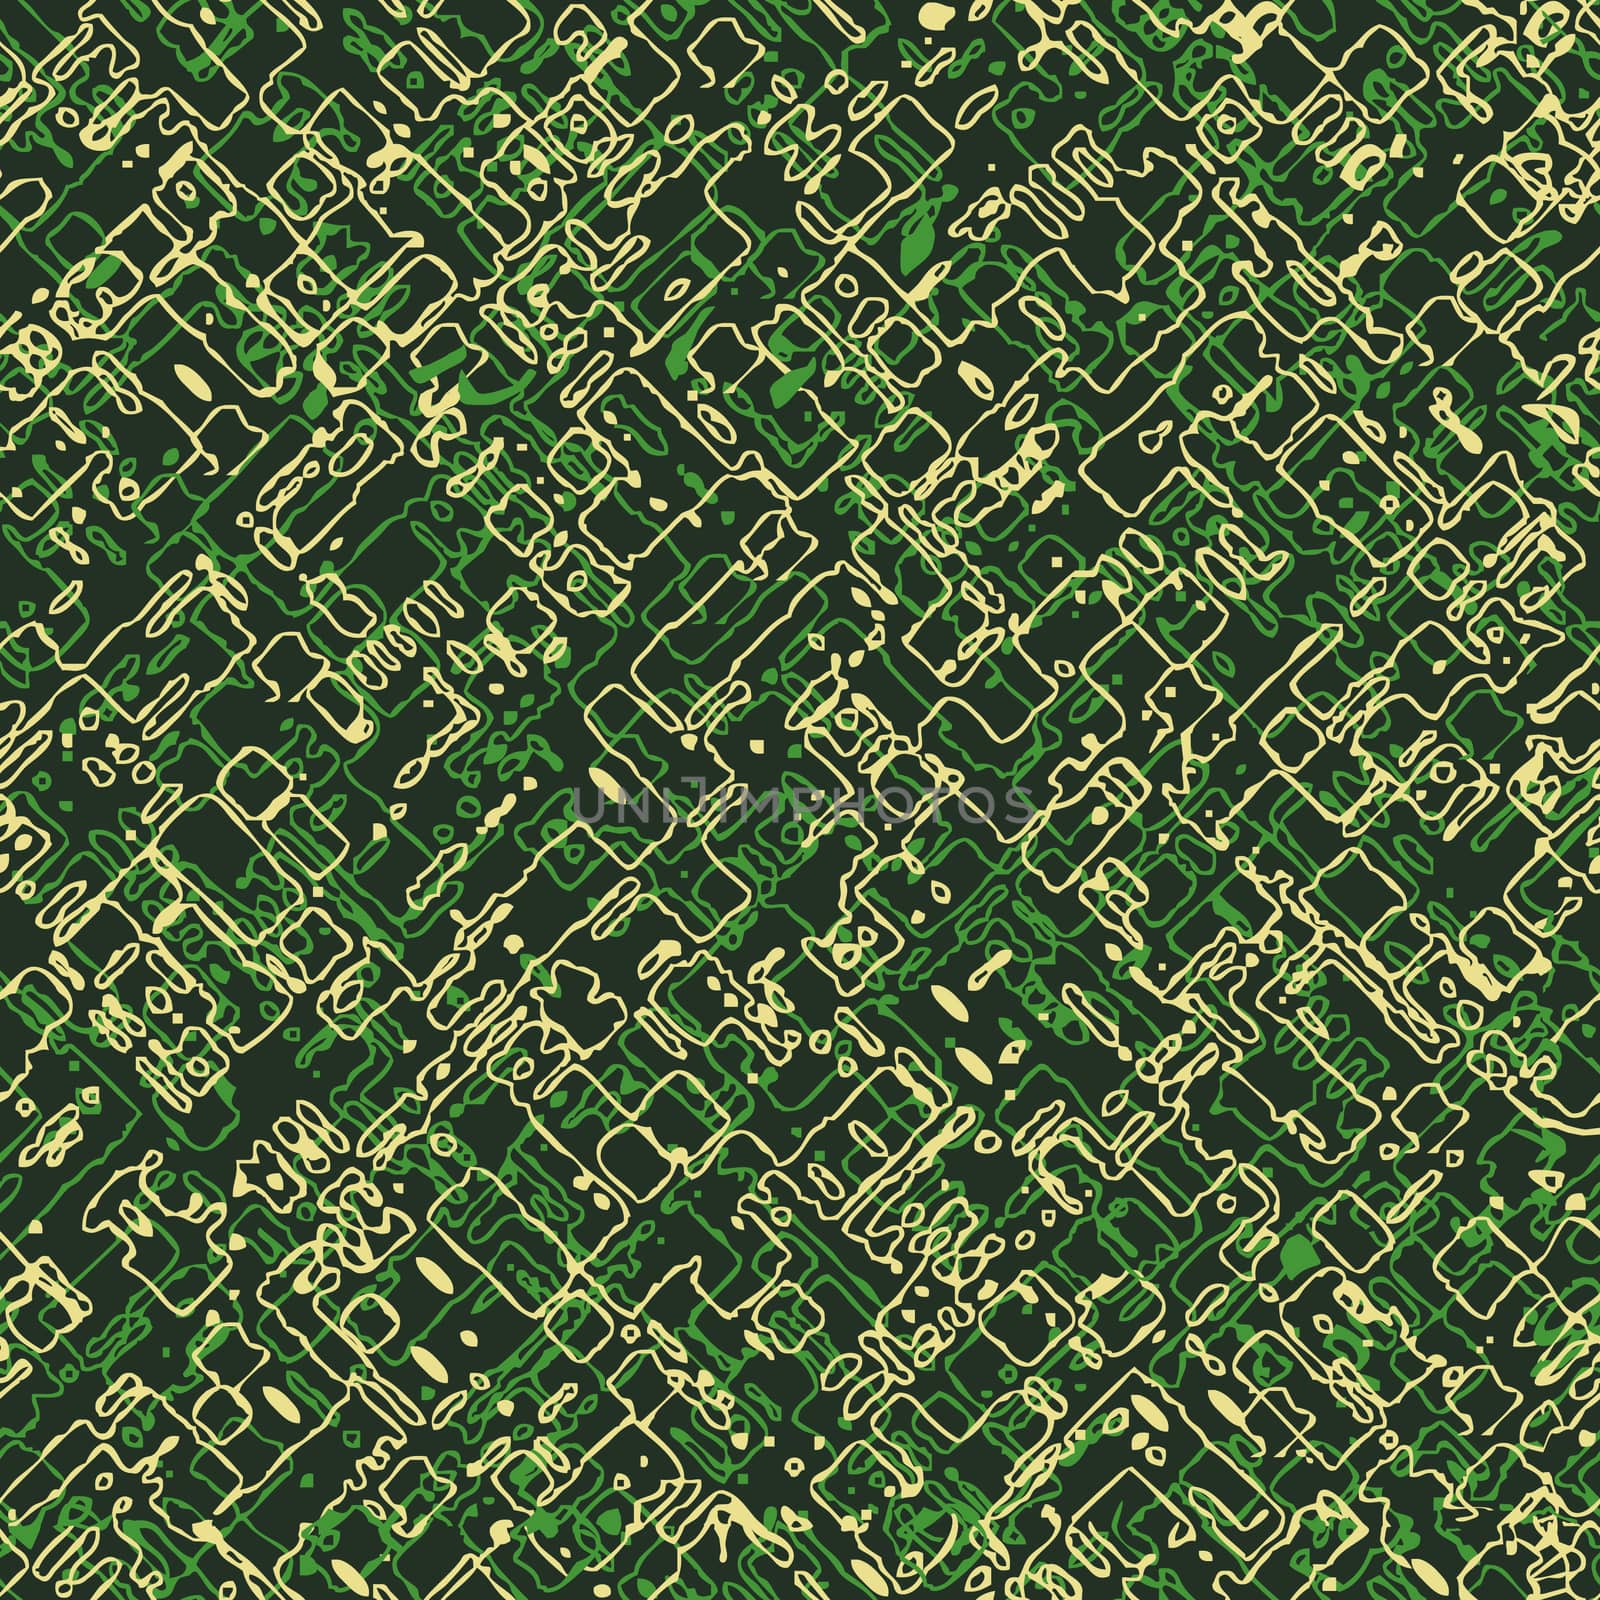 Camouflage seamless pattern by Alexzel